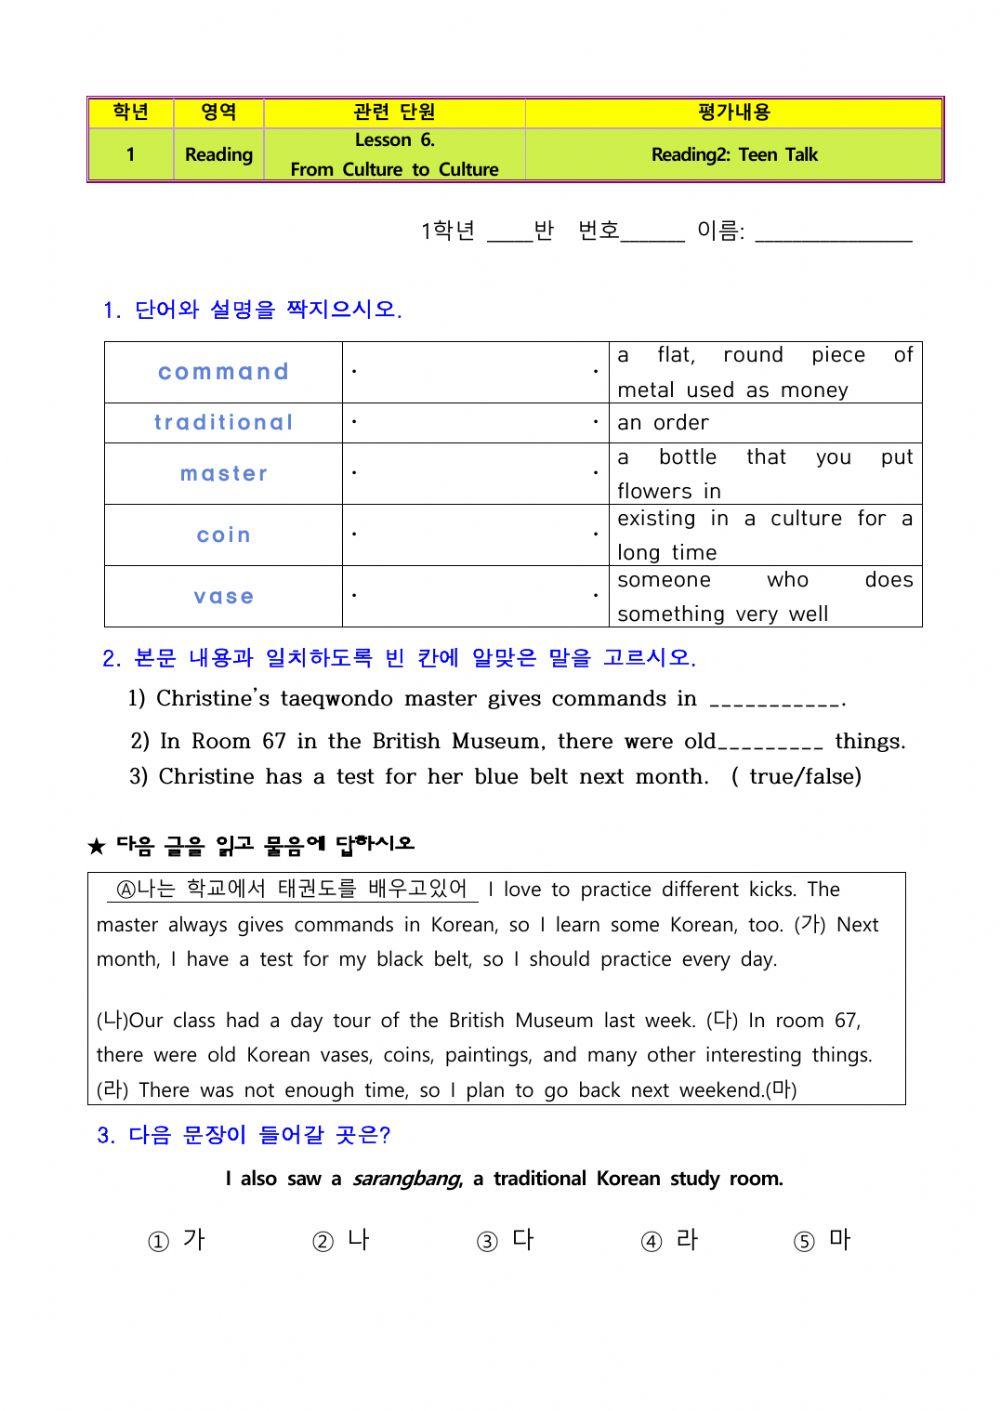 Sanghyun 1 lesson 6 reading 2